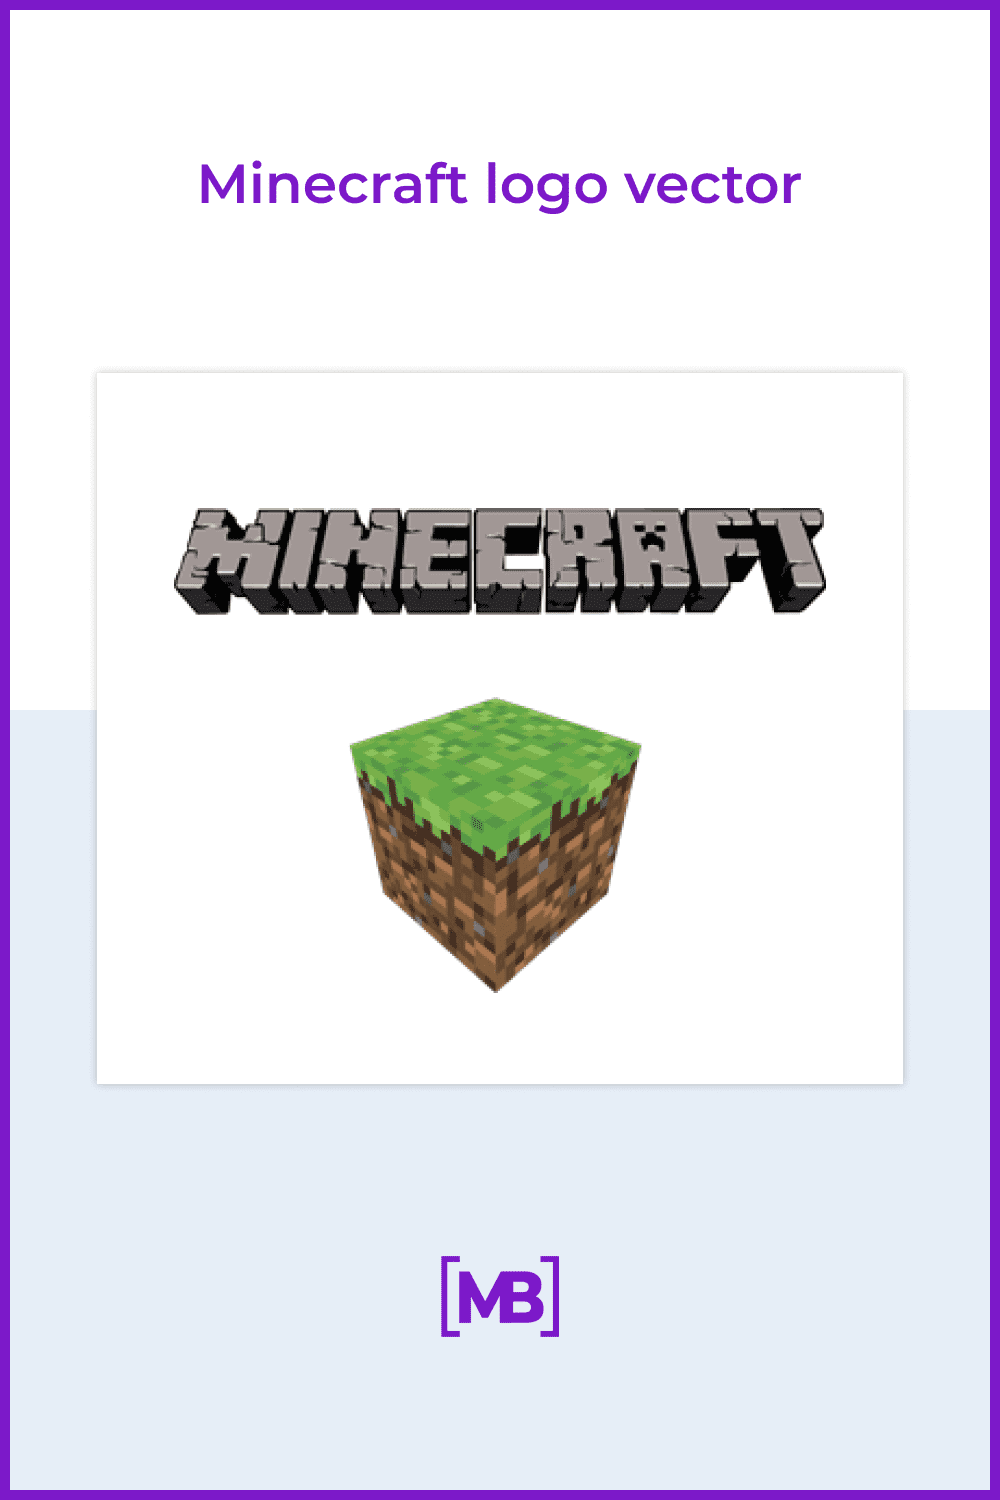 Minecraft logo vector.